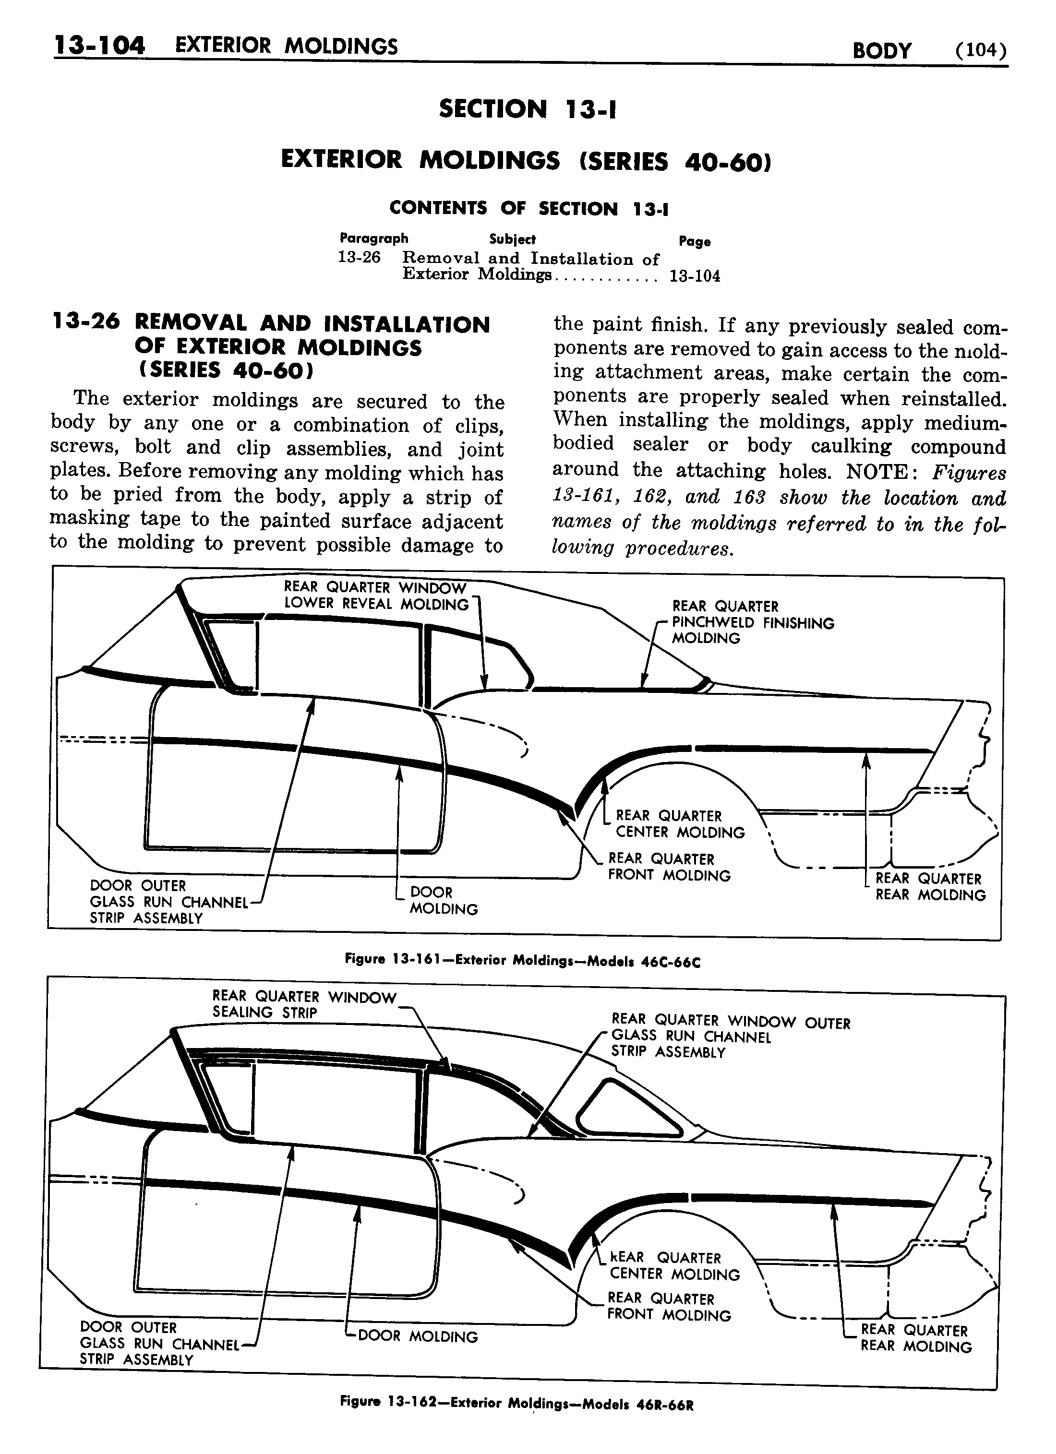 n_1957 Buick Body Service Manual-106-106.jpg